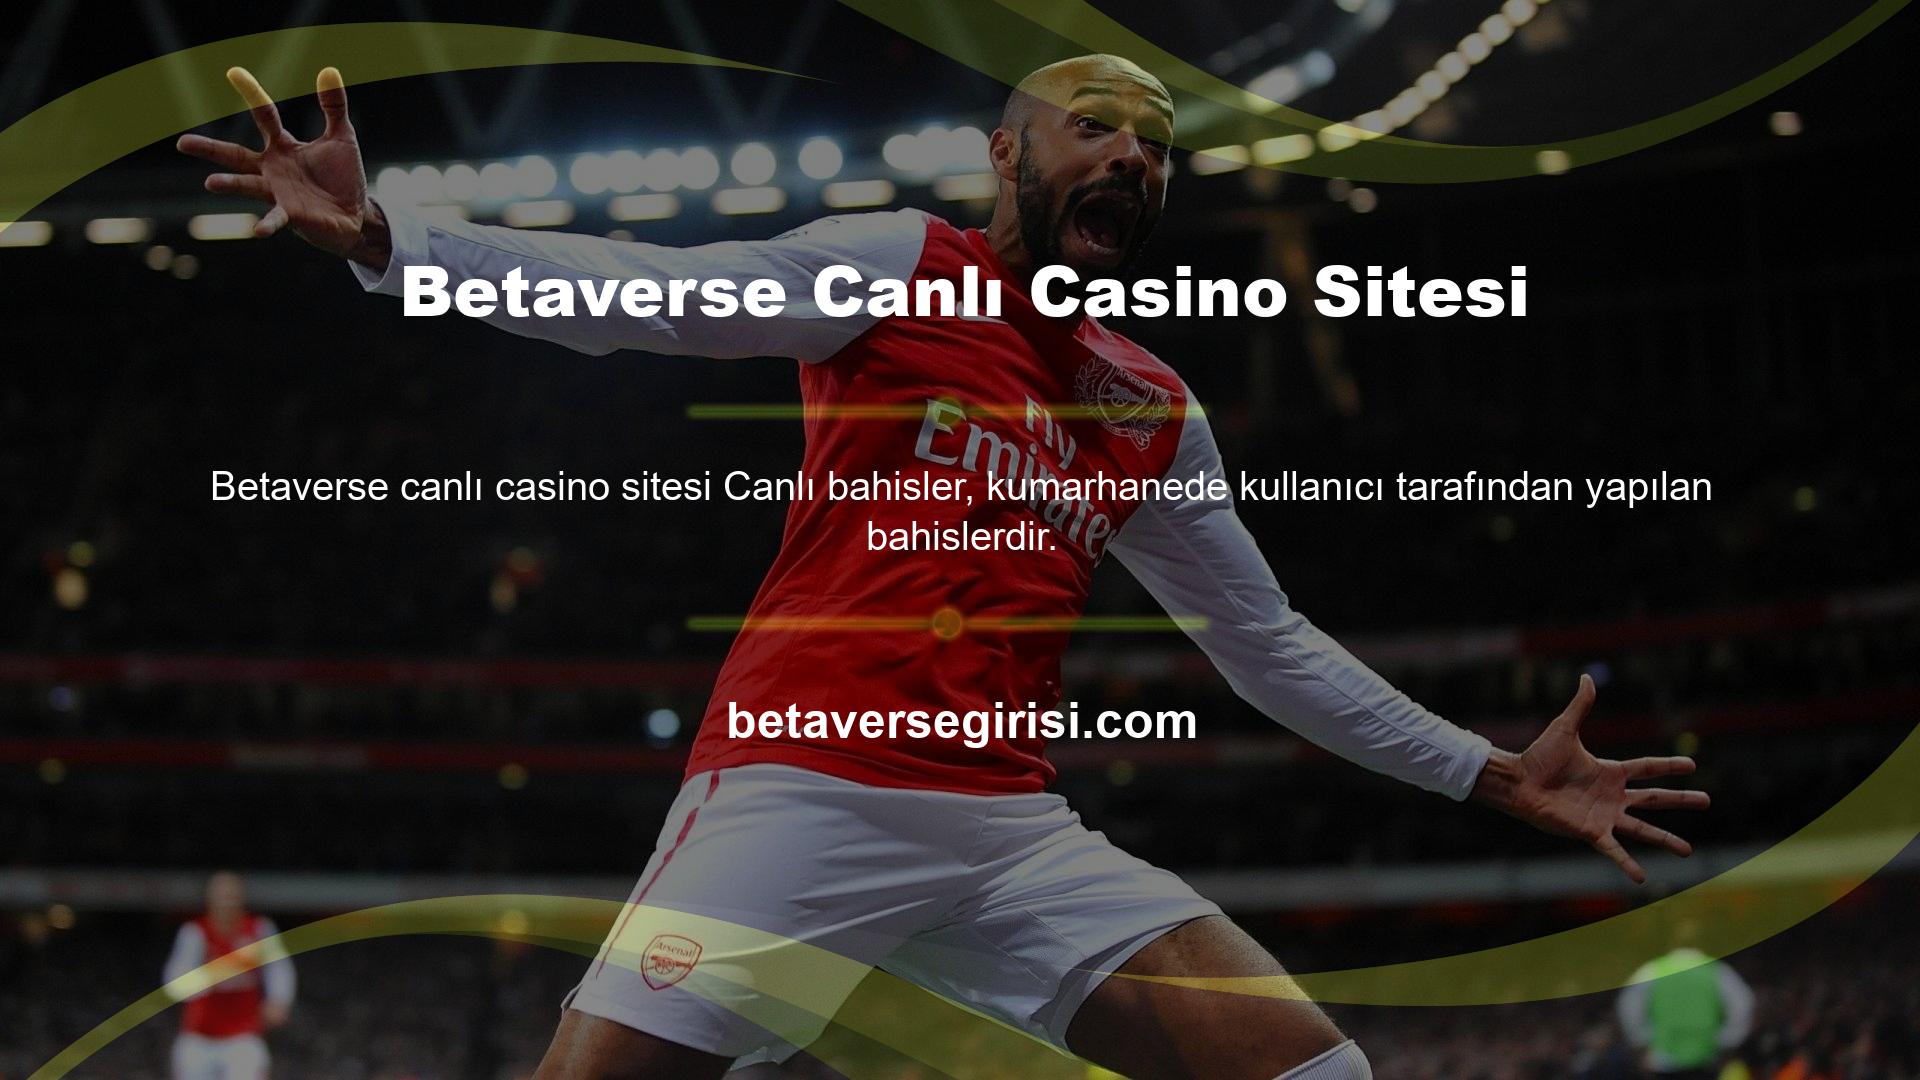 Betaverse Canlı Casino Sitesi